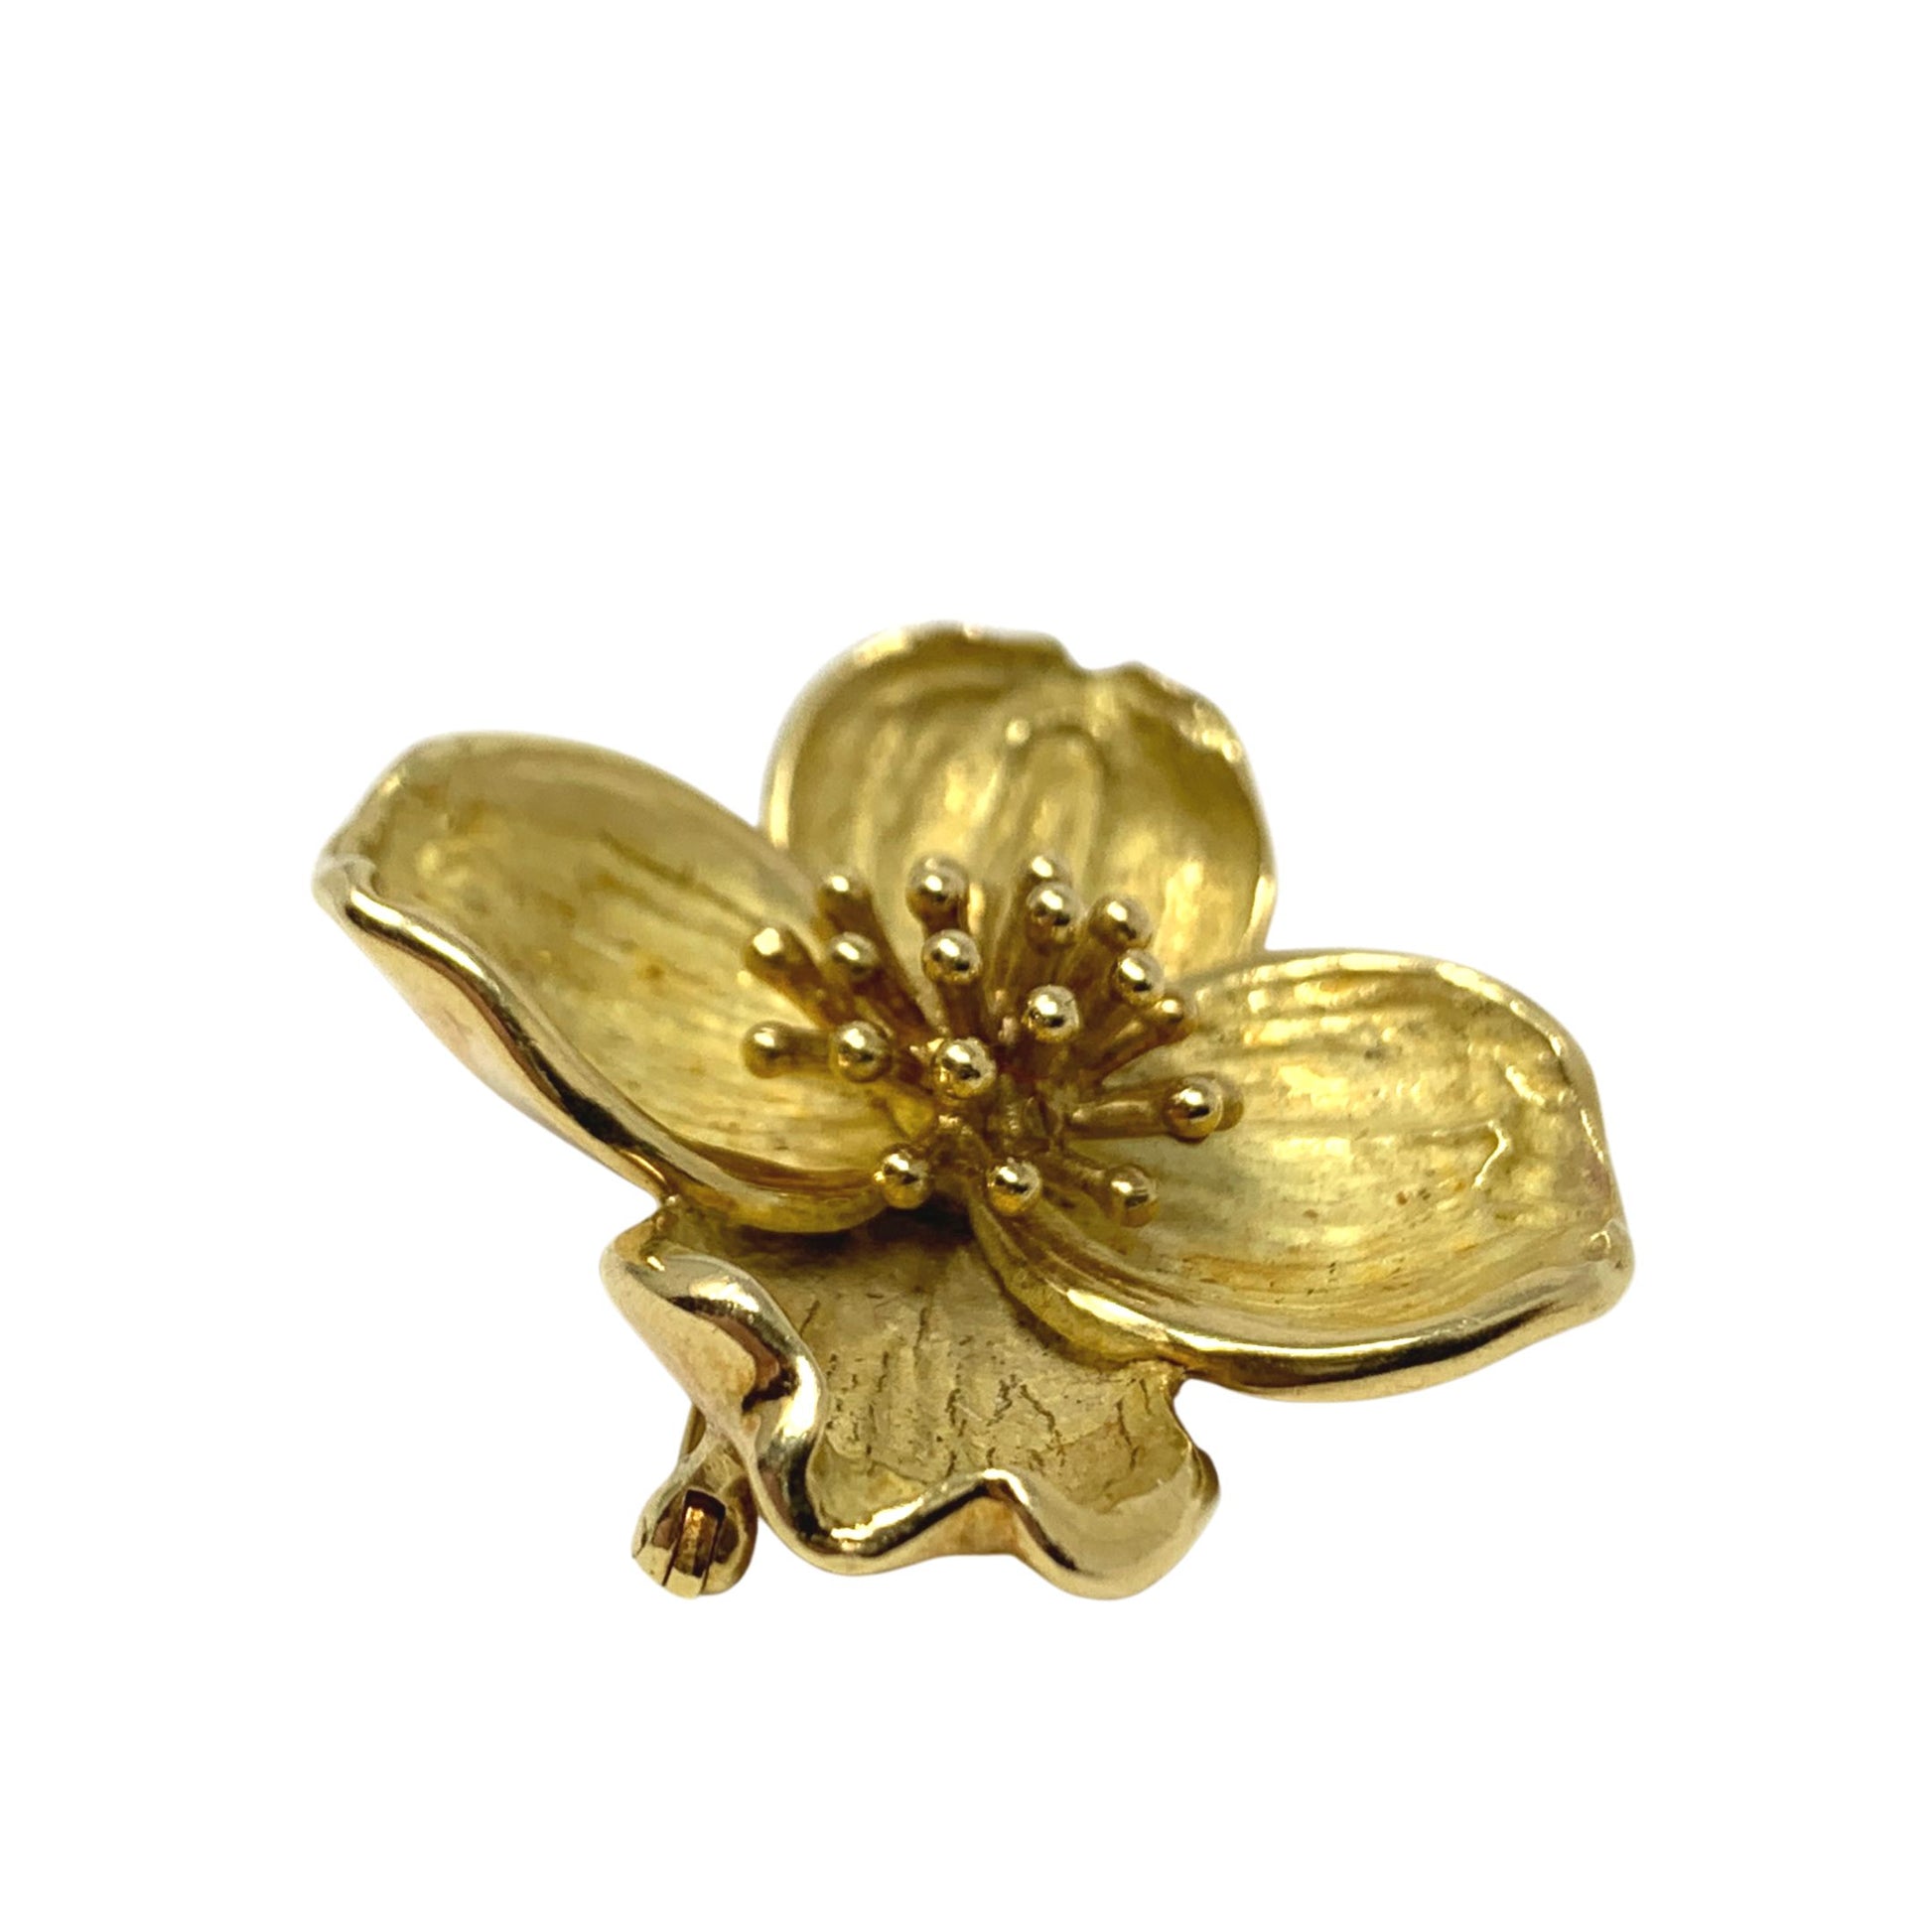 Authentic! Tiffany & Co 18K Yellow Gold Diamond Dogwood Flower Brooch Pin